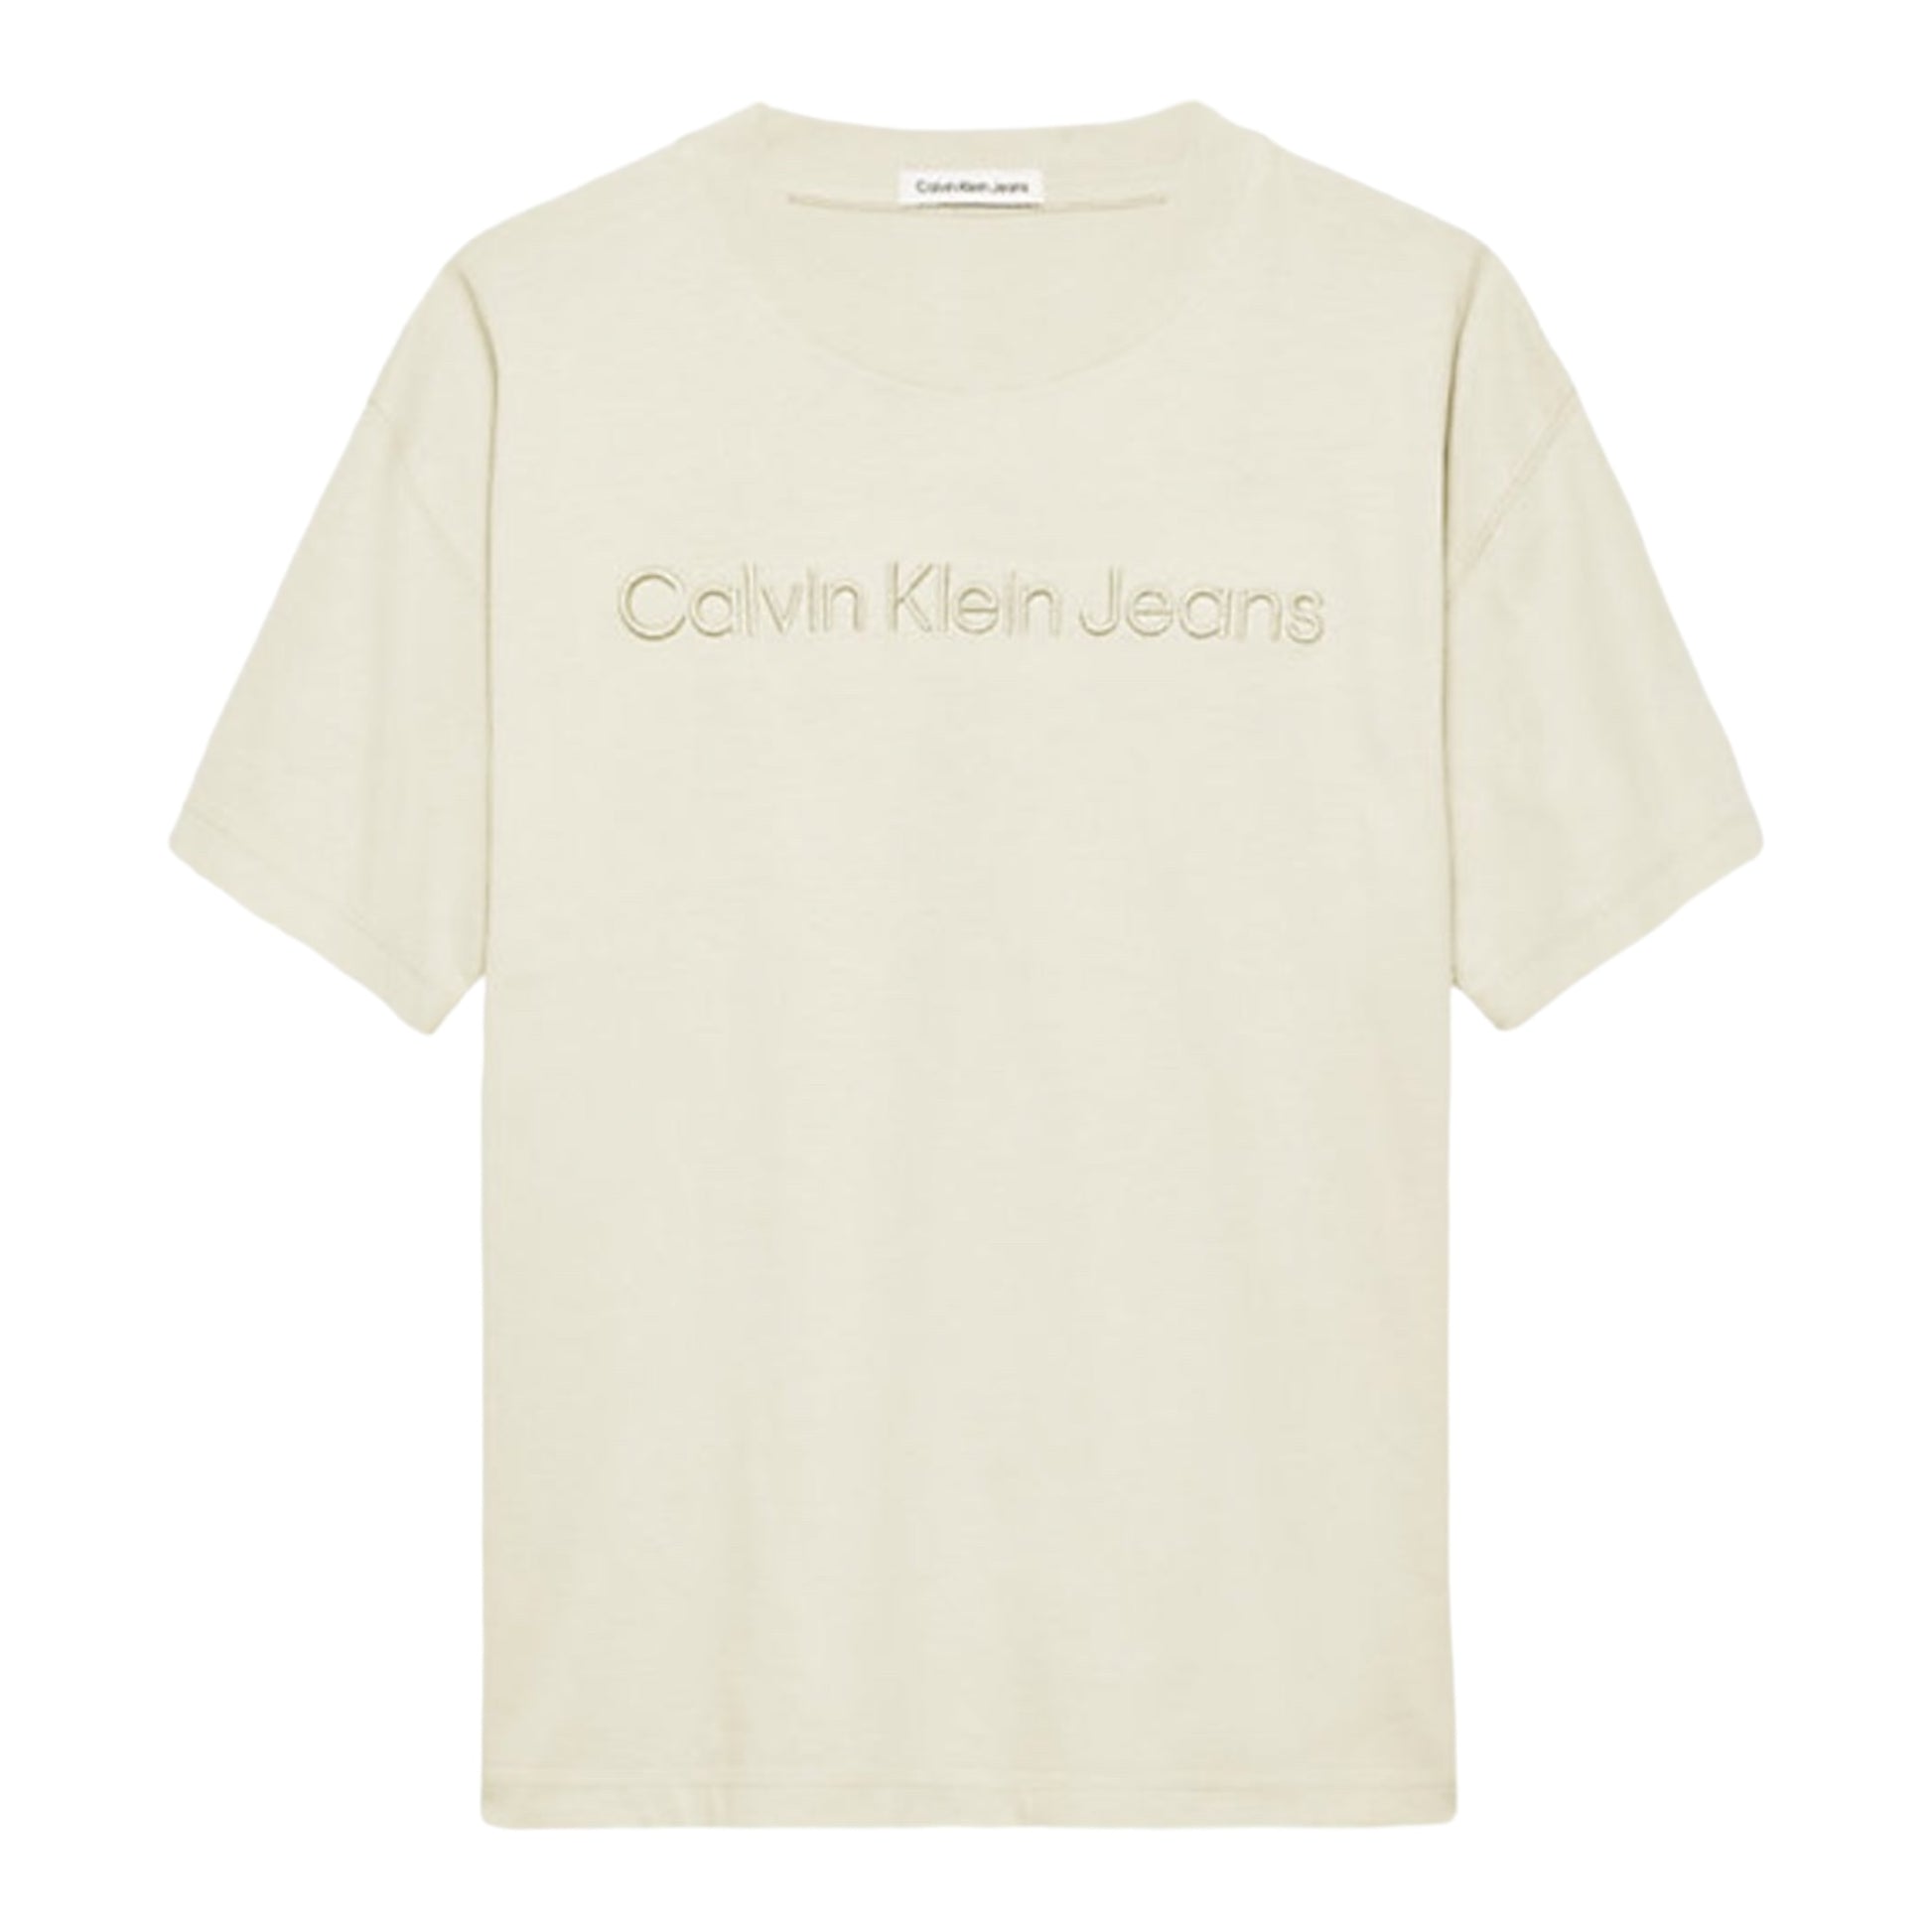 Calvin Klein, T-shirts, Calvin Klein - Green haze, Calvin Klein embossed T-shirt